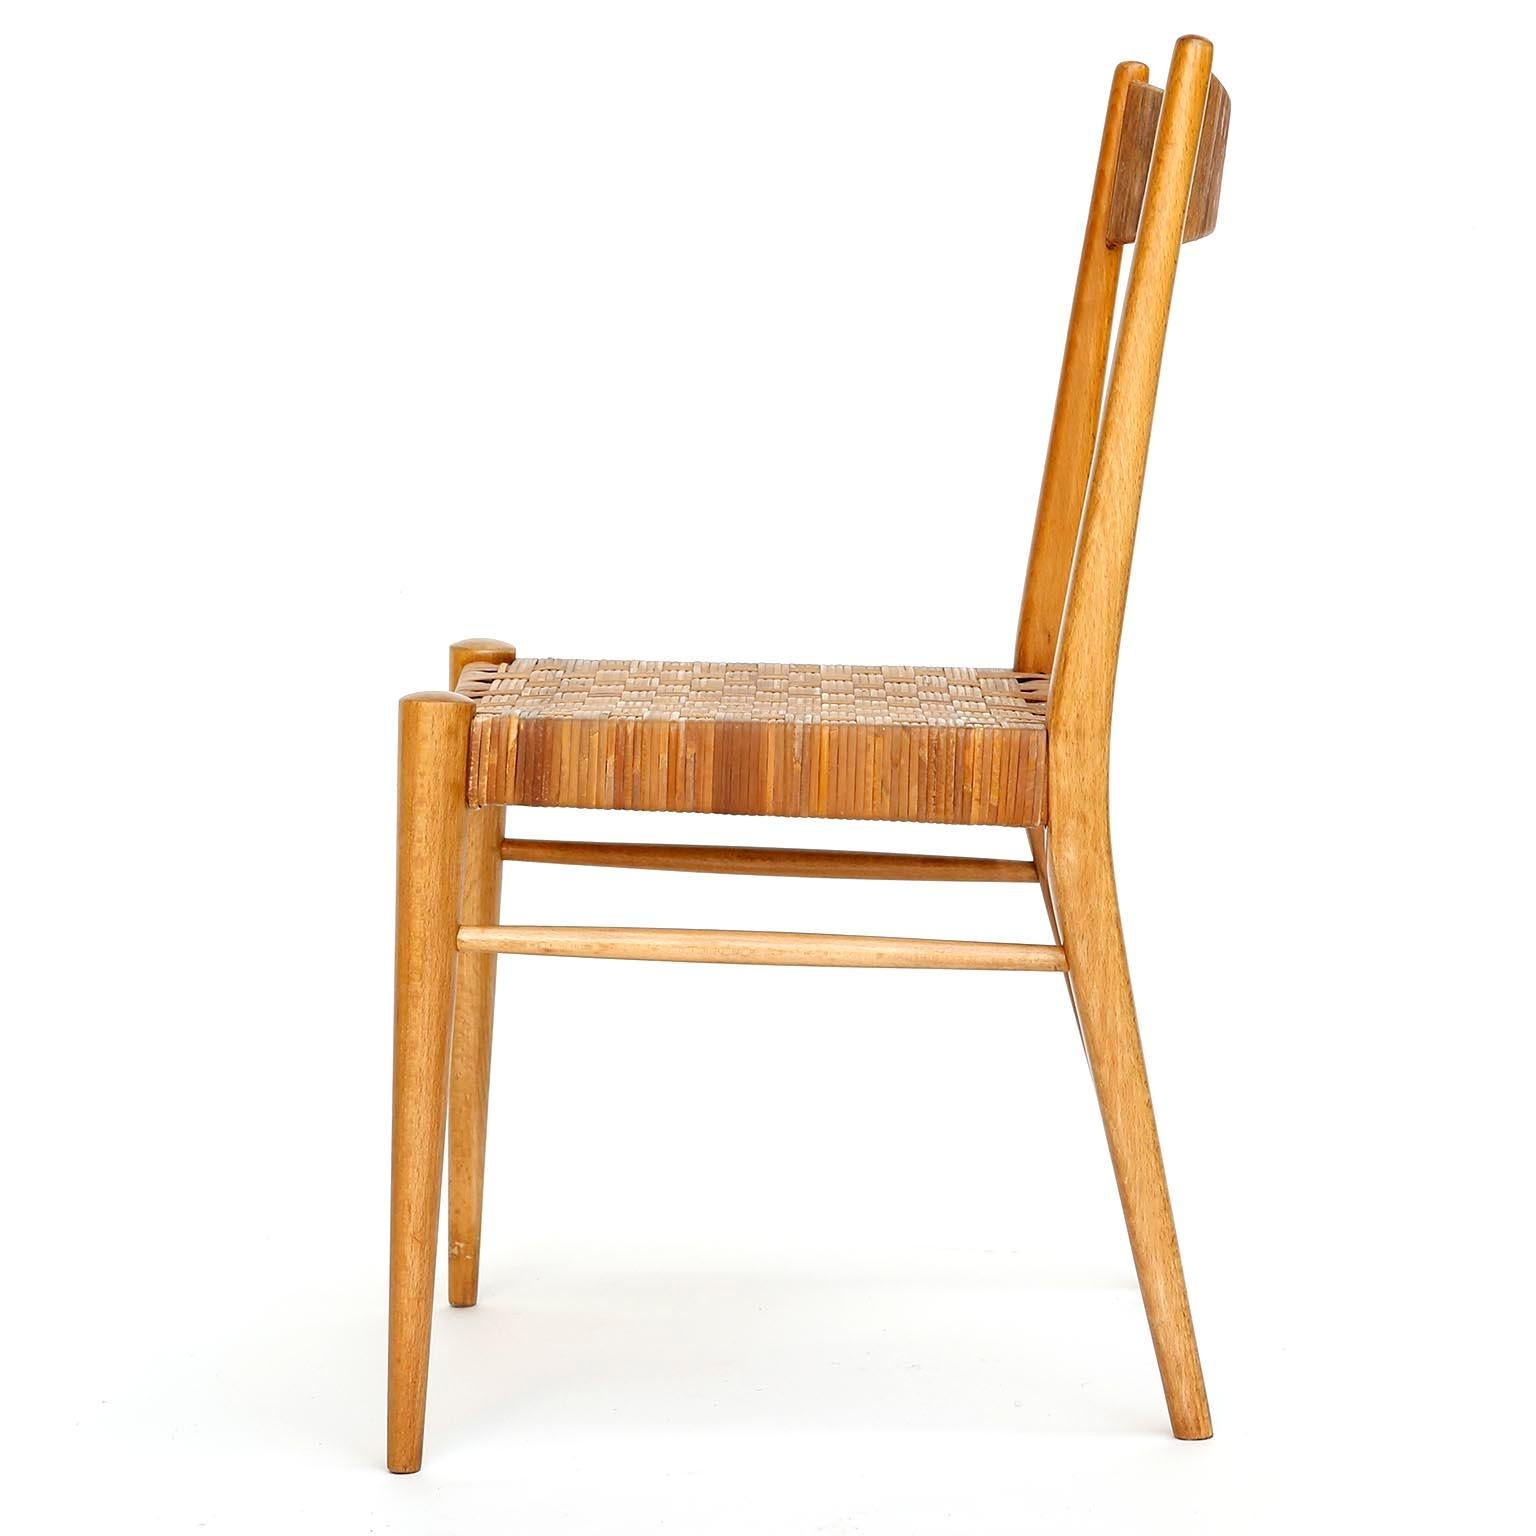 Four Anna-Lülja Praun Chairs, Wood Wicker Cane, 1950s For Sale 2